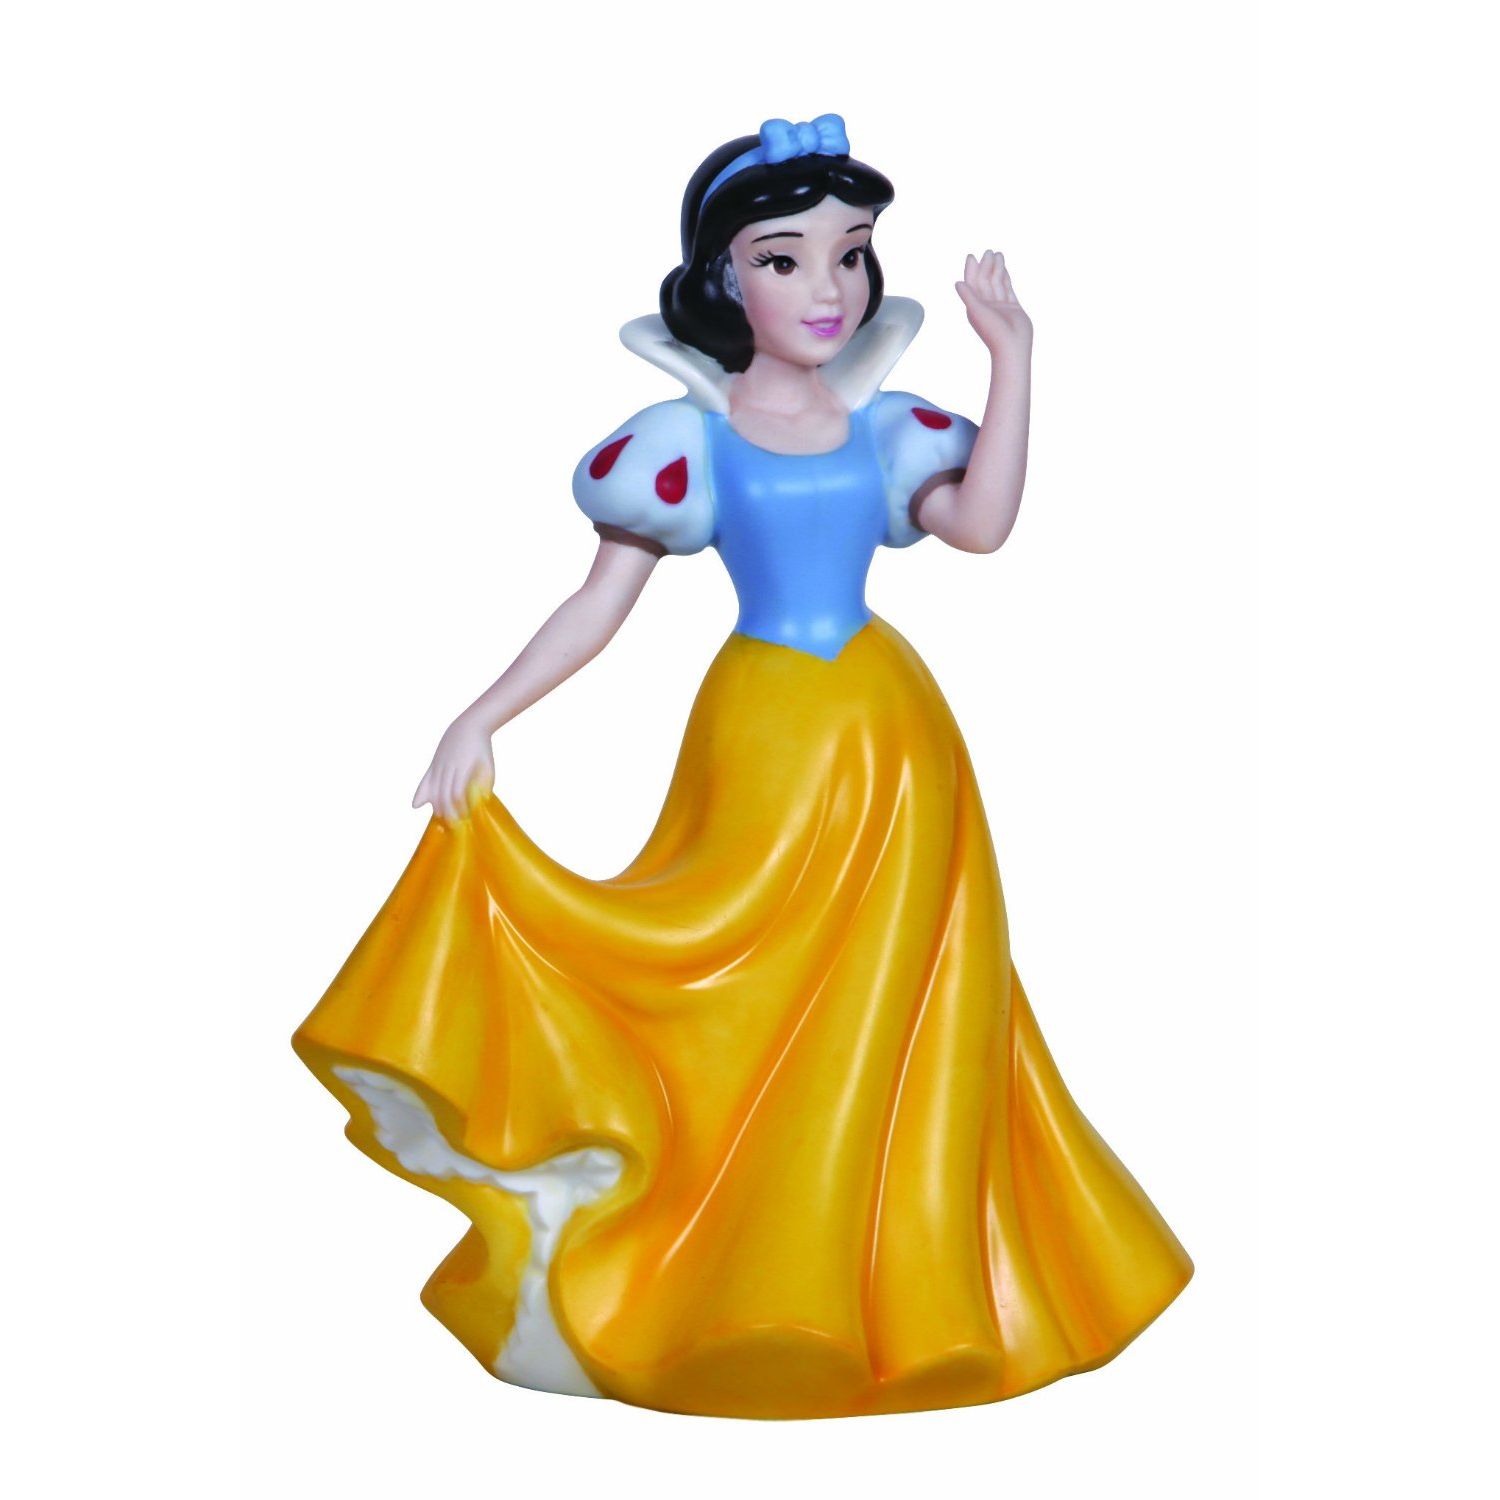 Precious Moments Disney The Fairest of Them All - Snow White Figurine